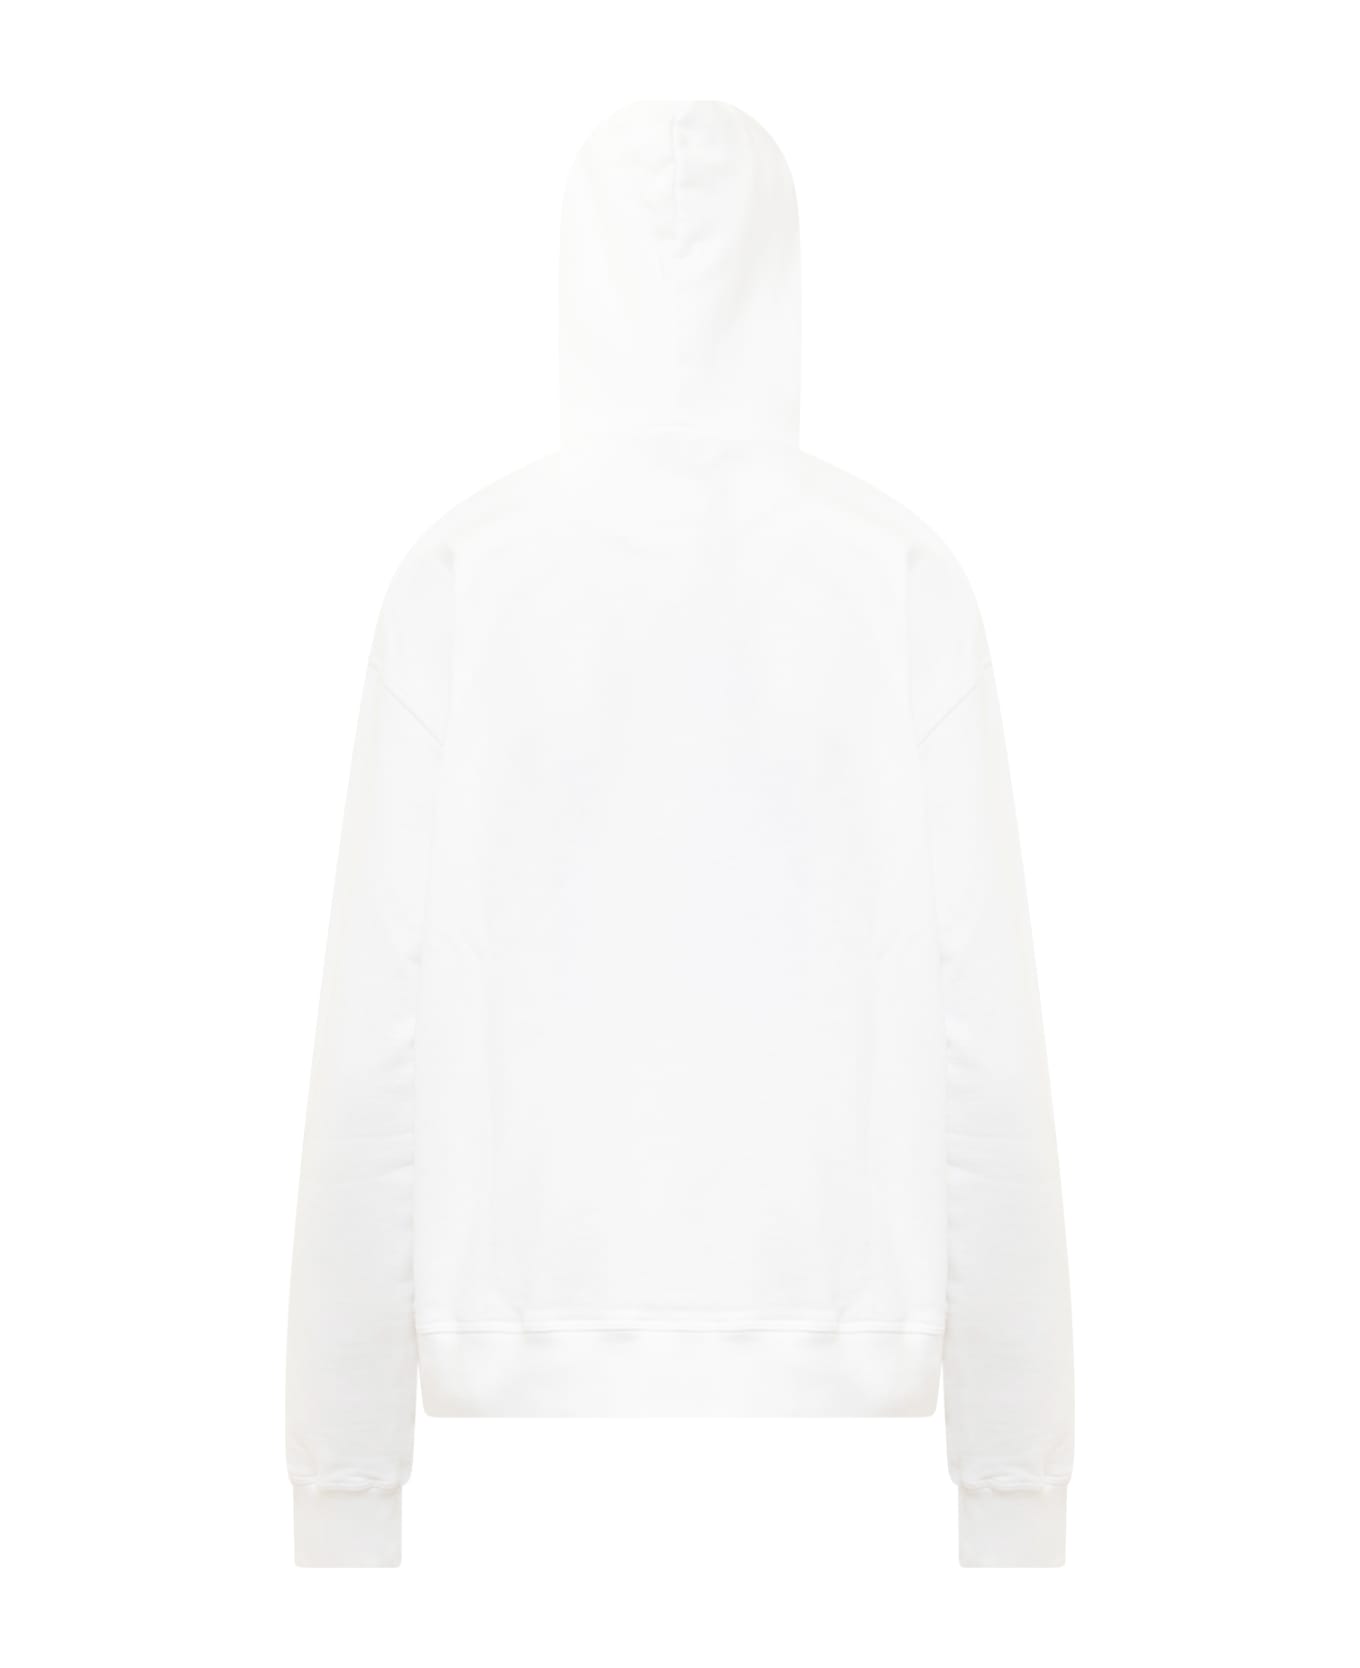 Dsquared2 Sweatshirt - White